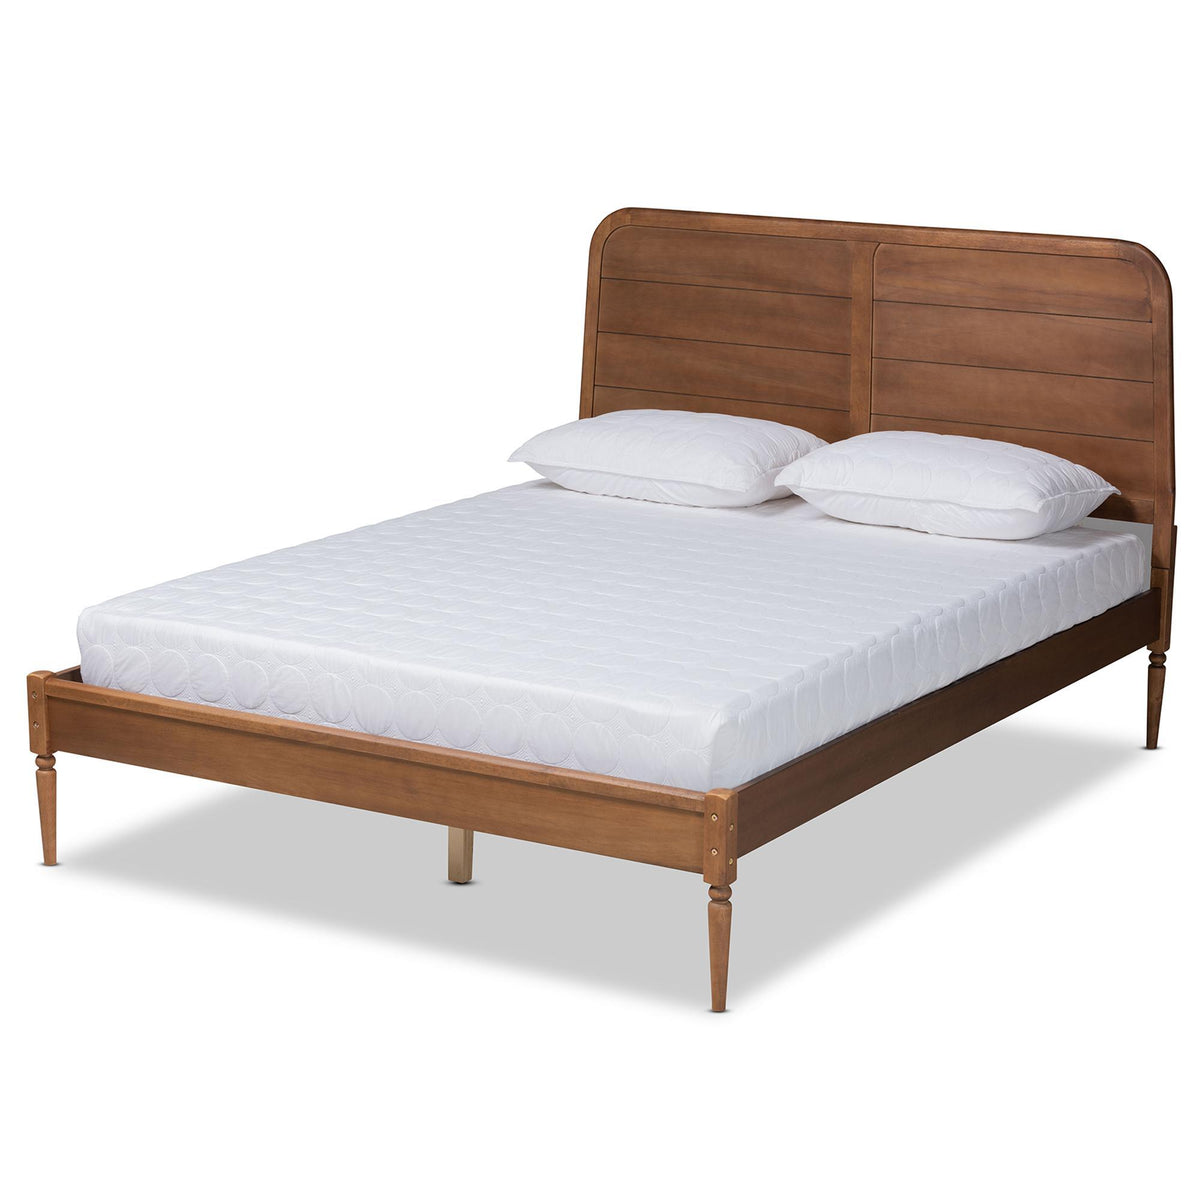 Baxton Studio Kassidy Classic And Traditional Walnut Brown Finished Wood King Size Platform Bed - MG0063-Walnut-King